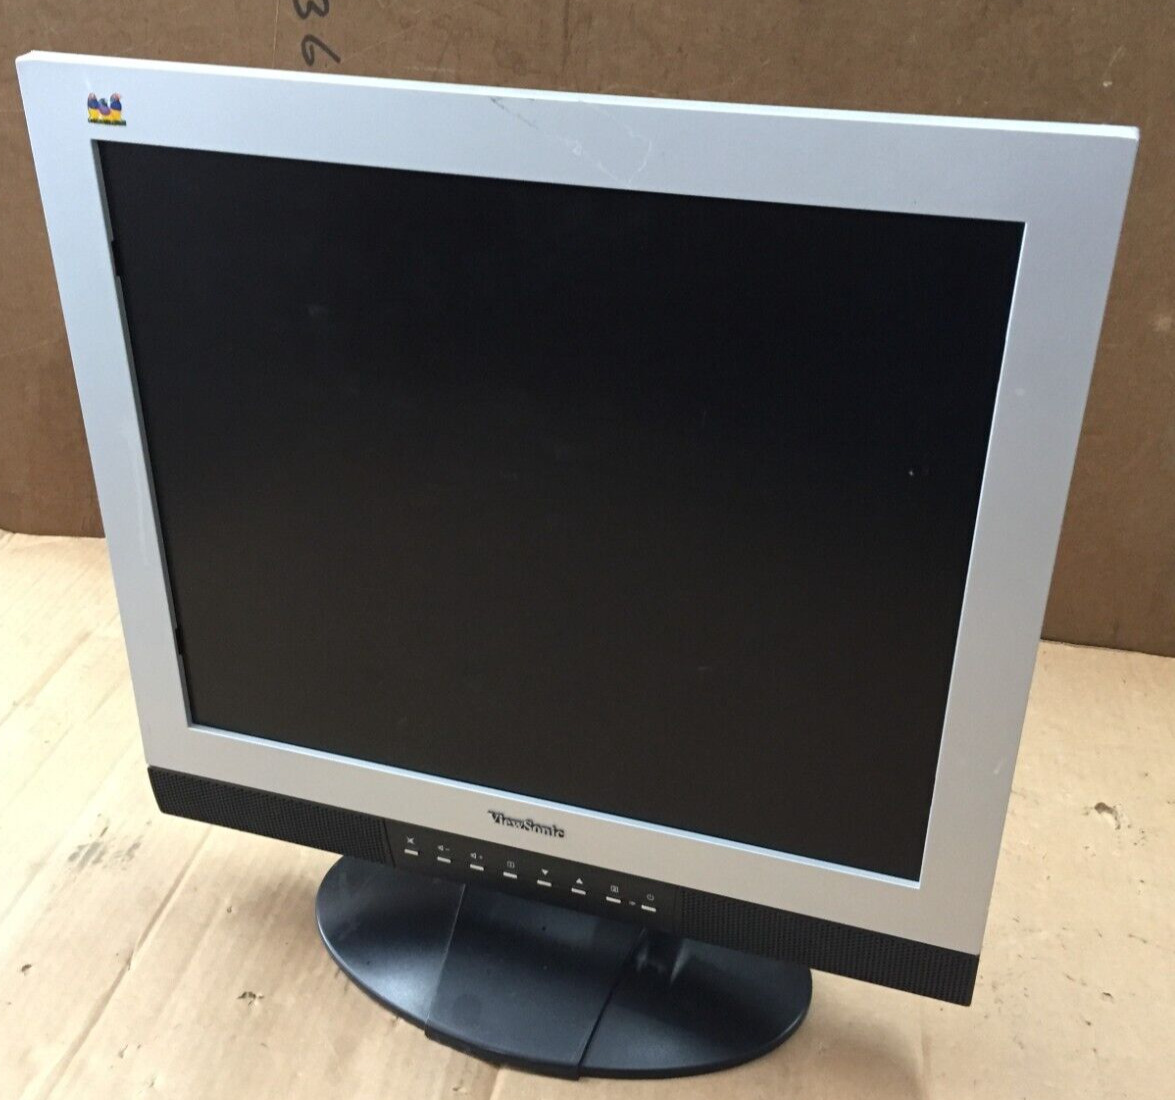 ViewSonic VX900 LCD Monitor VLCDS23668-1W (no power cord)